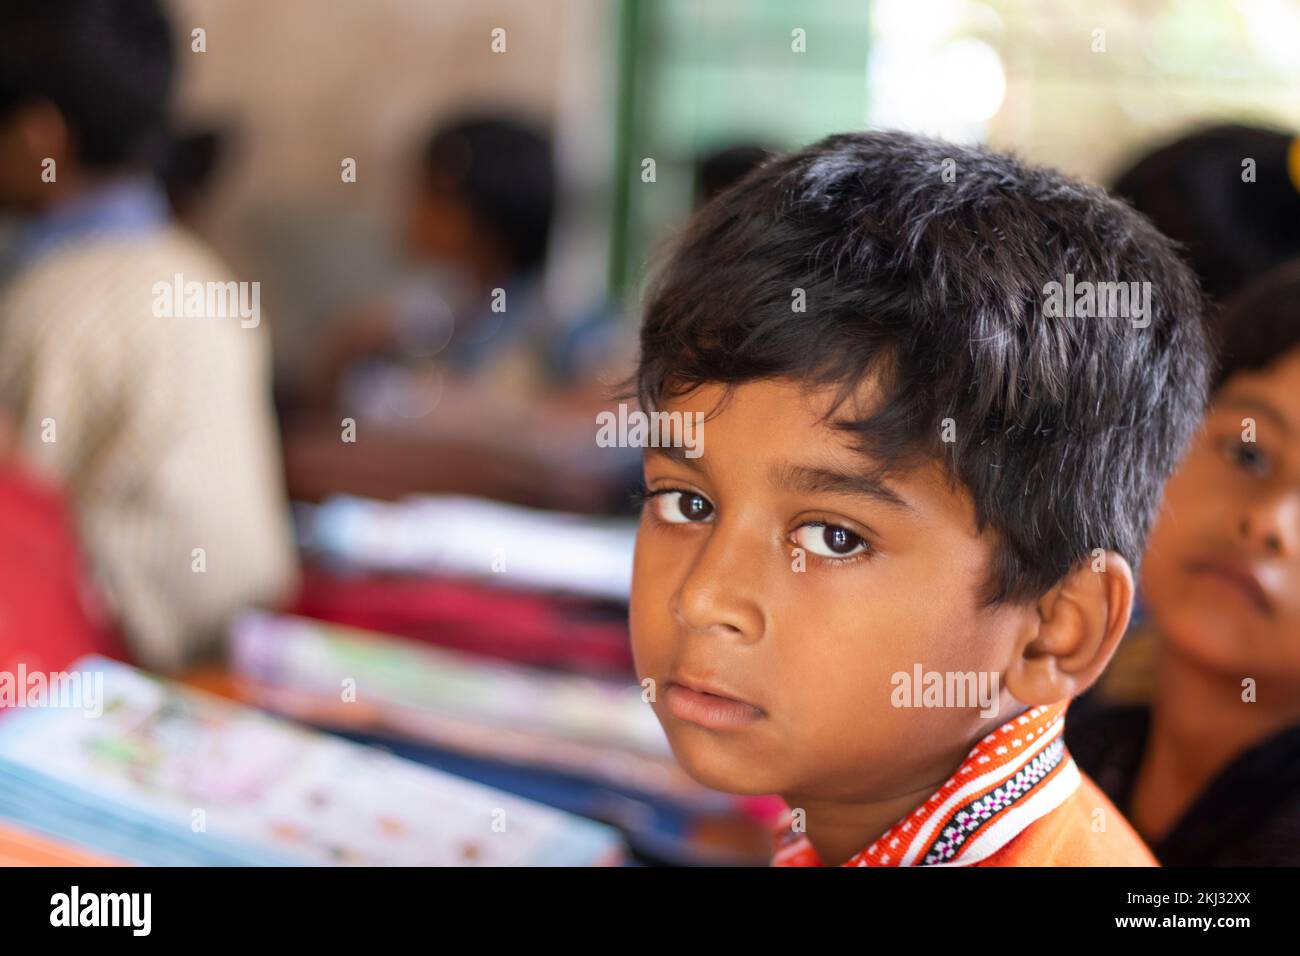 School boy looking at camera in classroom Stock Photo